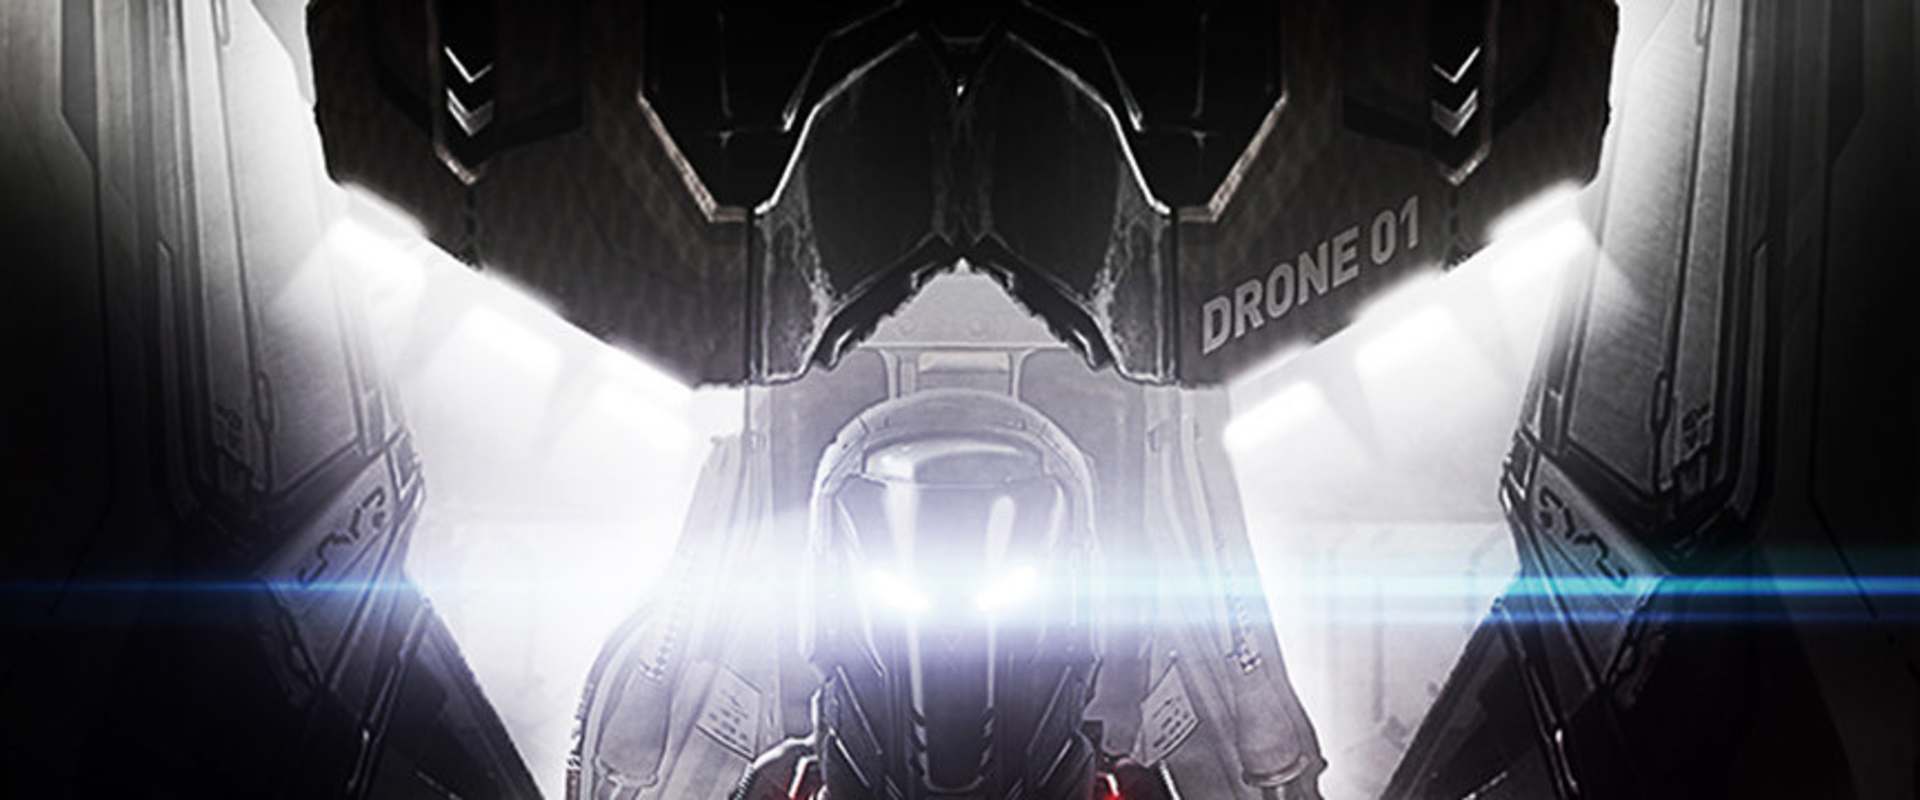 Battle Drone background 2